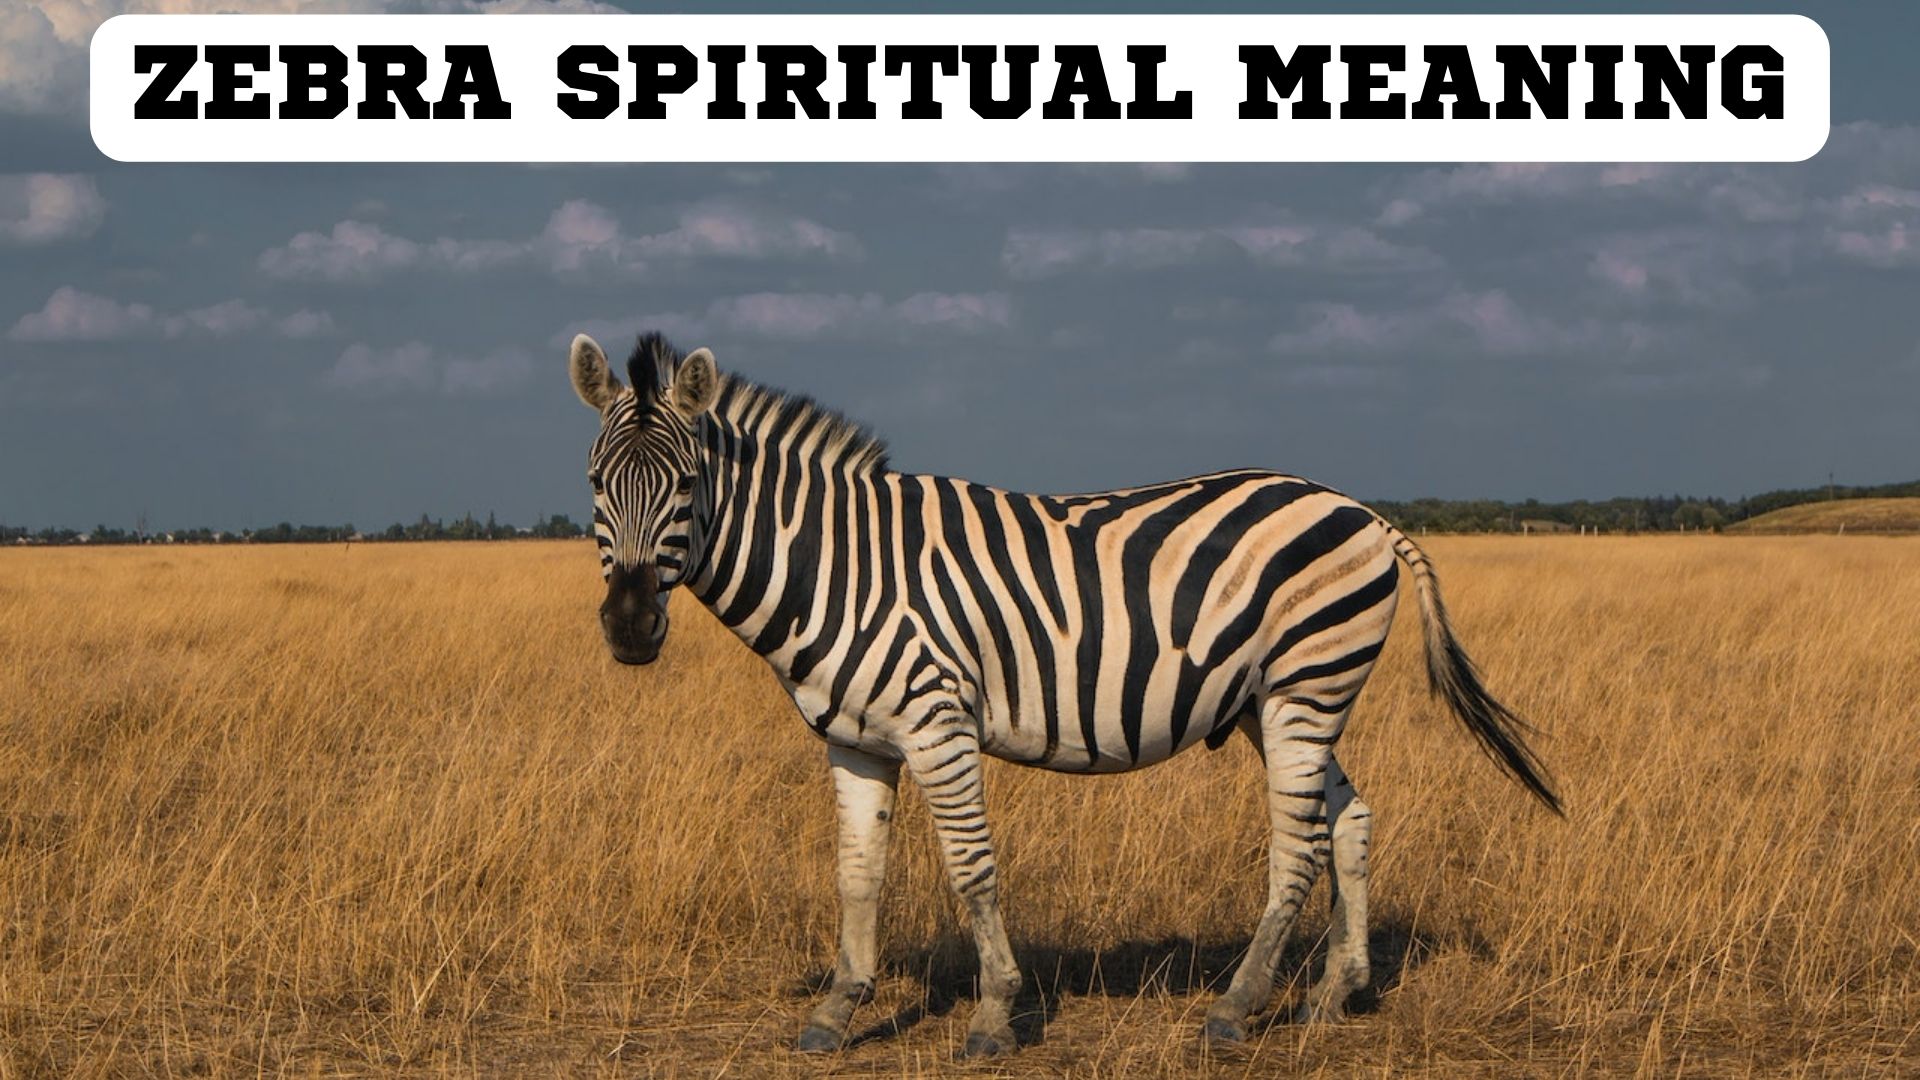 Zebra Spiritual Meaning - Creativity And Uniqueness